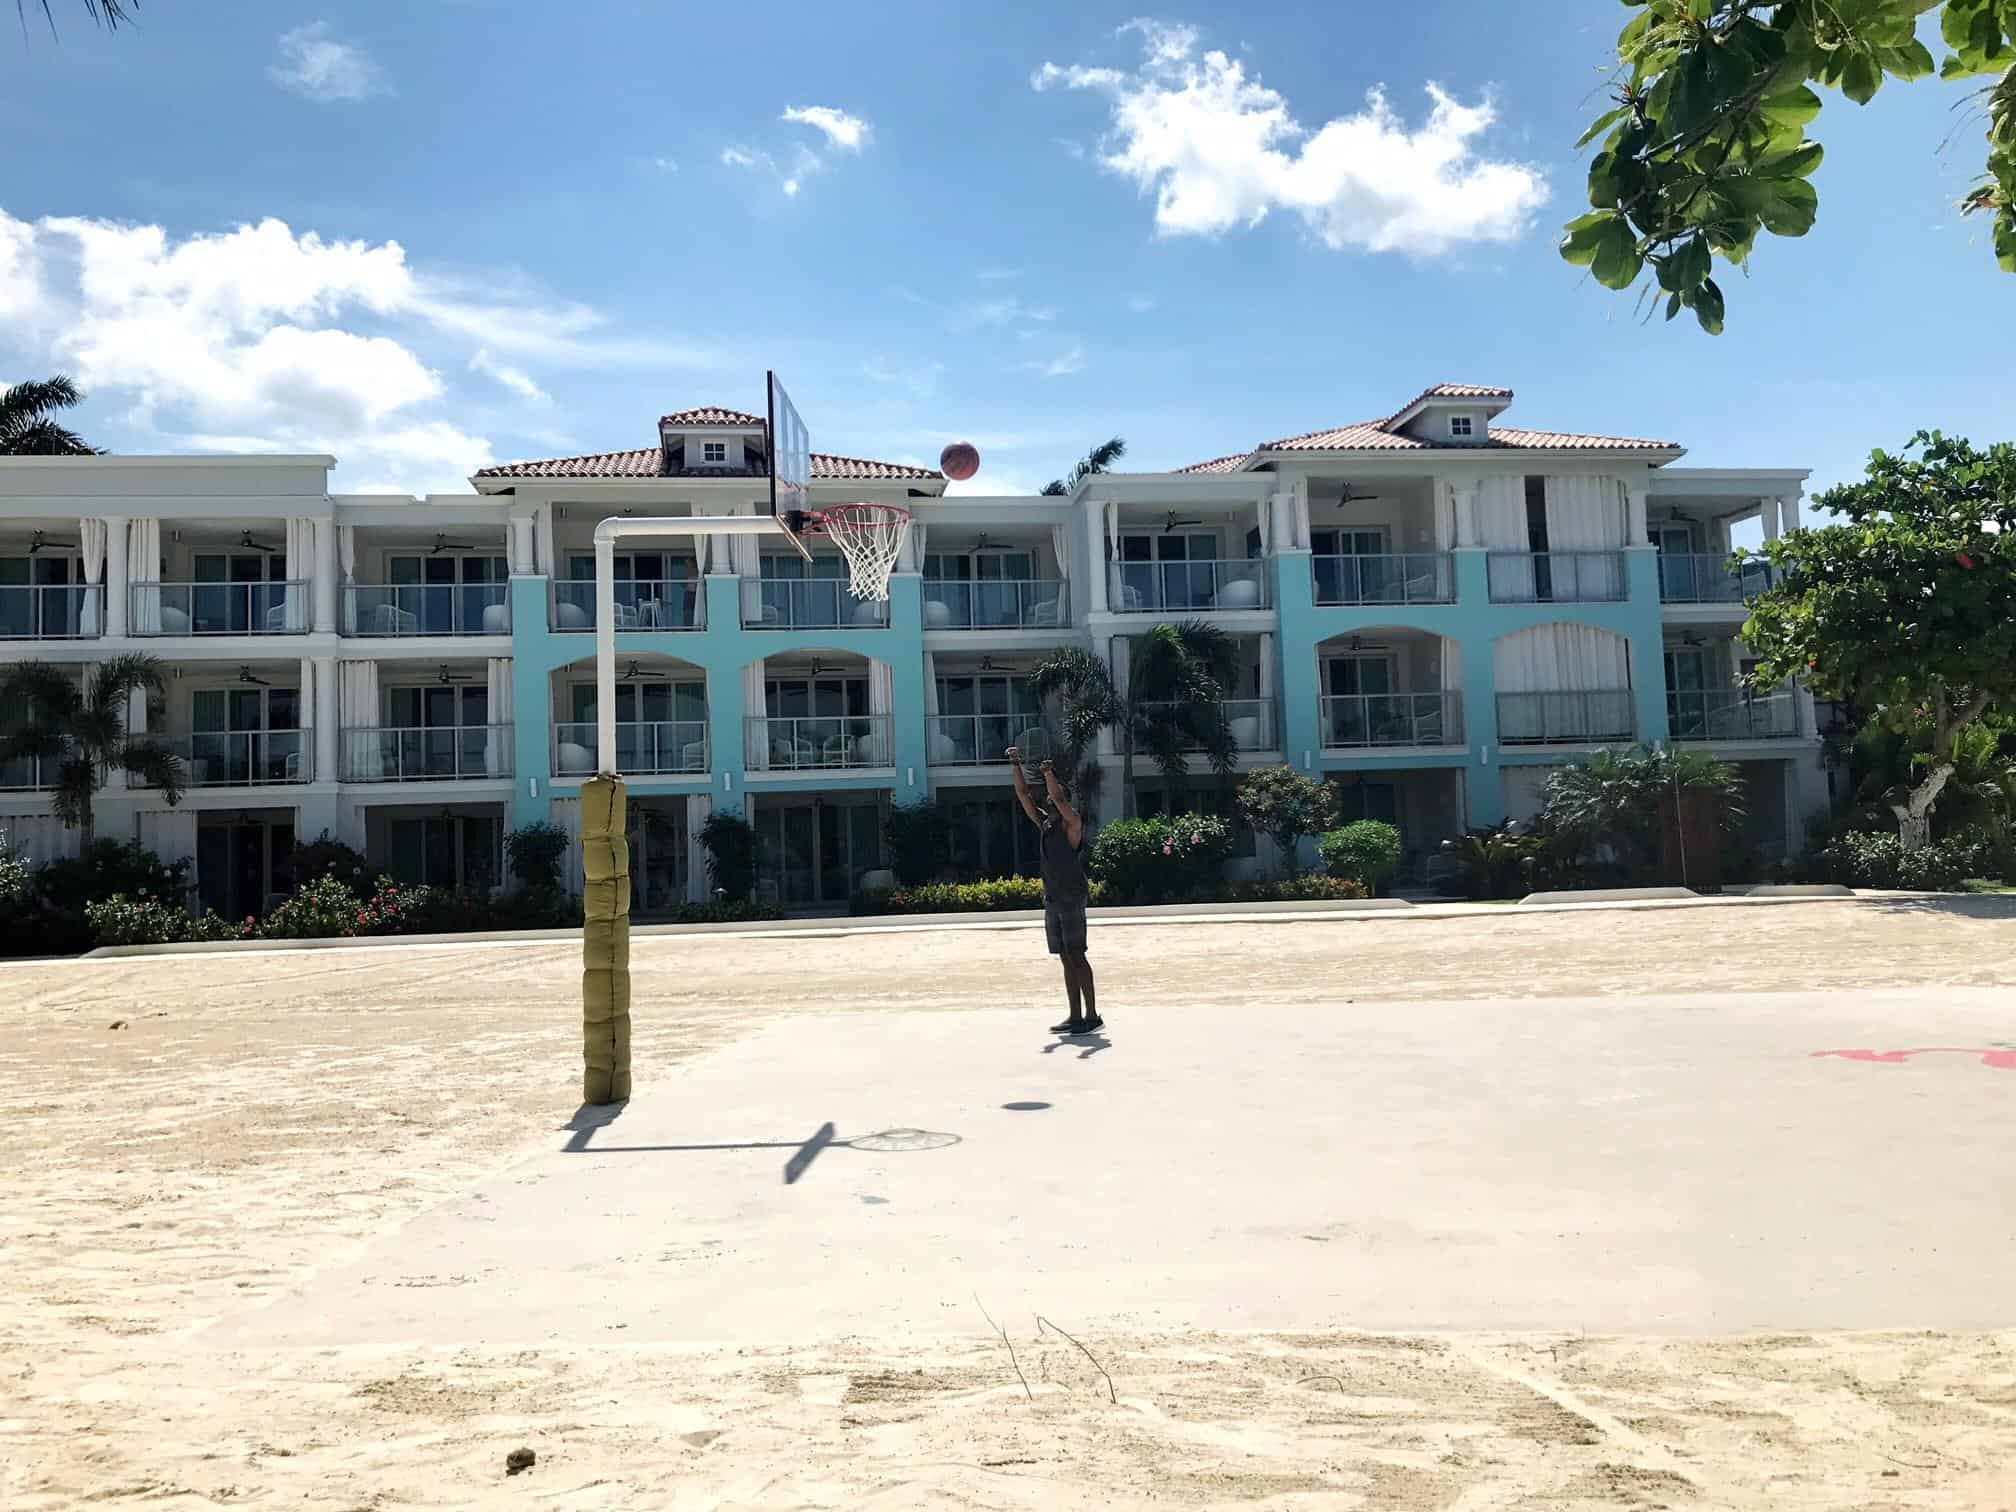 Sandals montego bay Jamaica Resort land based activities include basketball